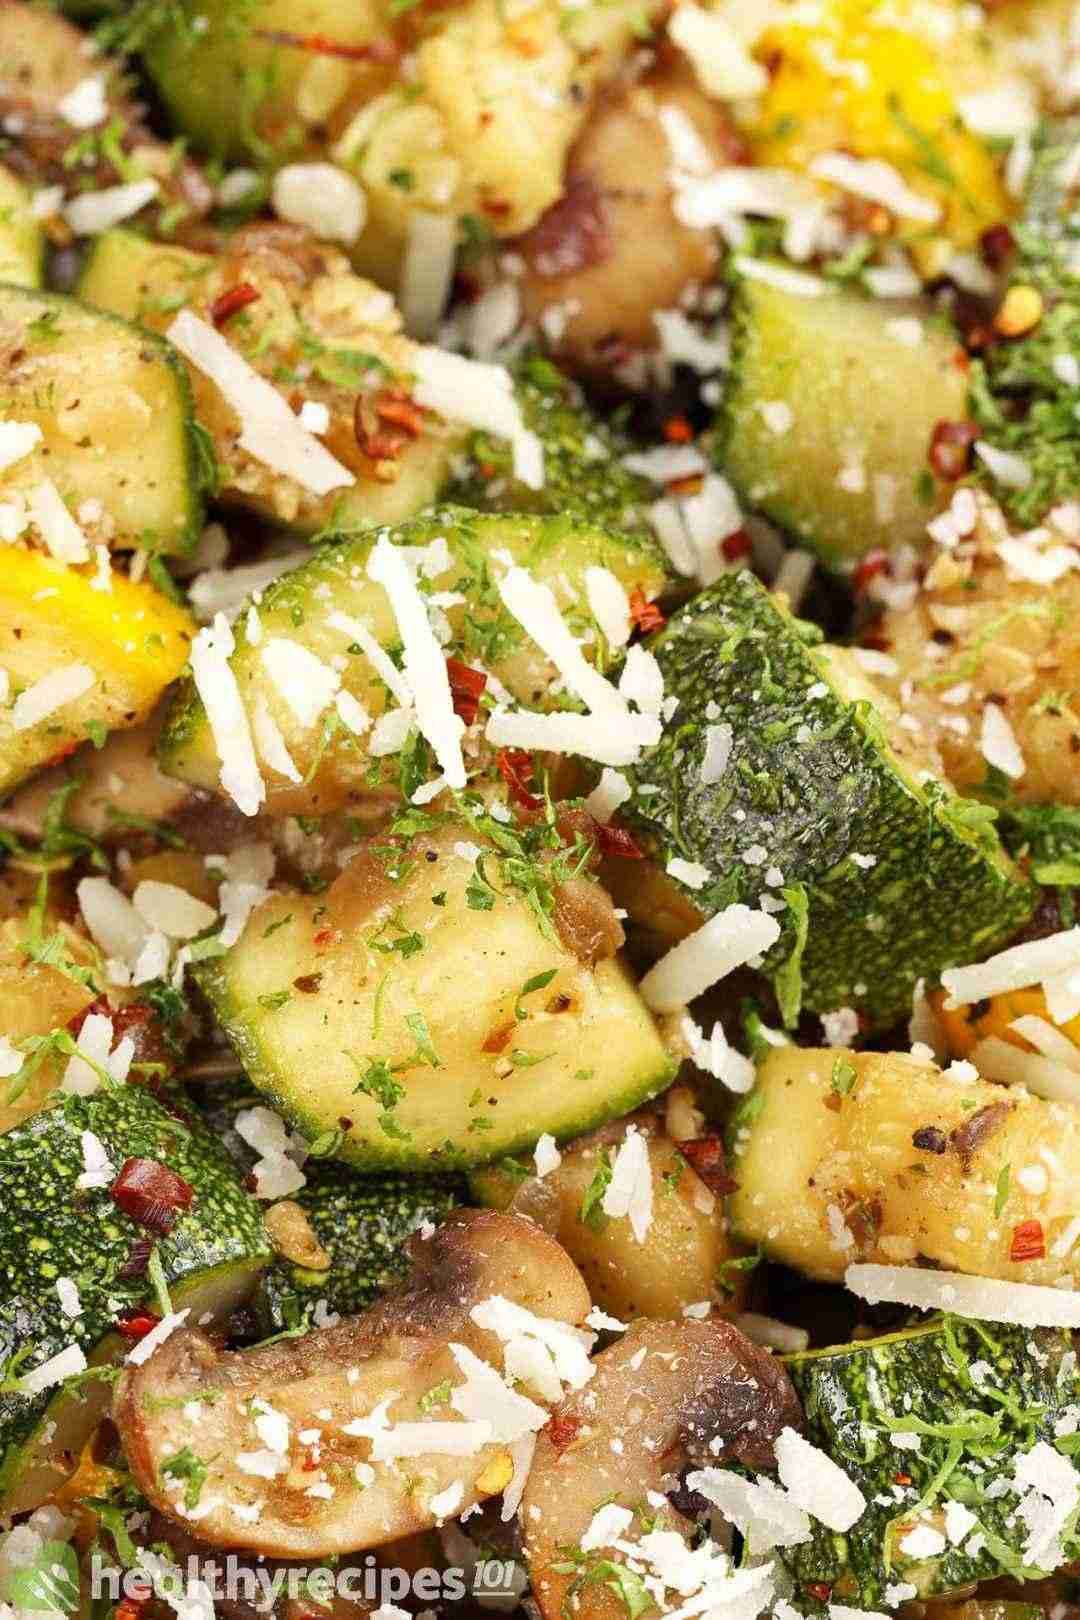 Instant Pot Zucchini Recipe: Juicy, Well-Seasoned Summer Eats